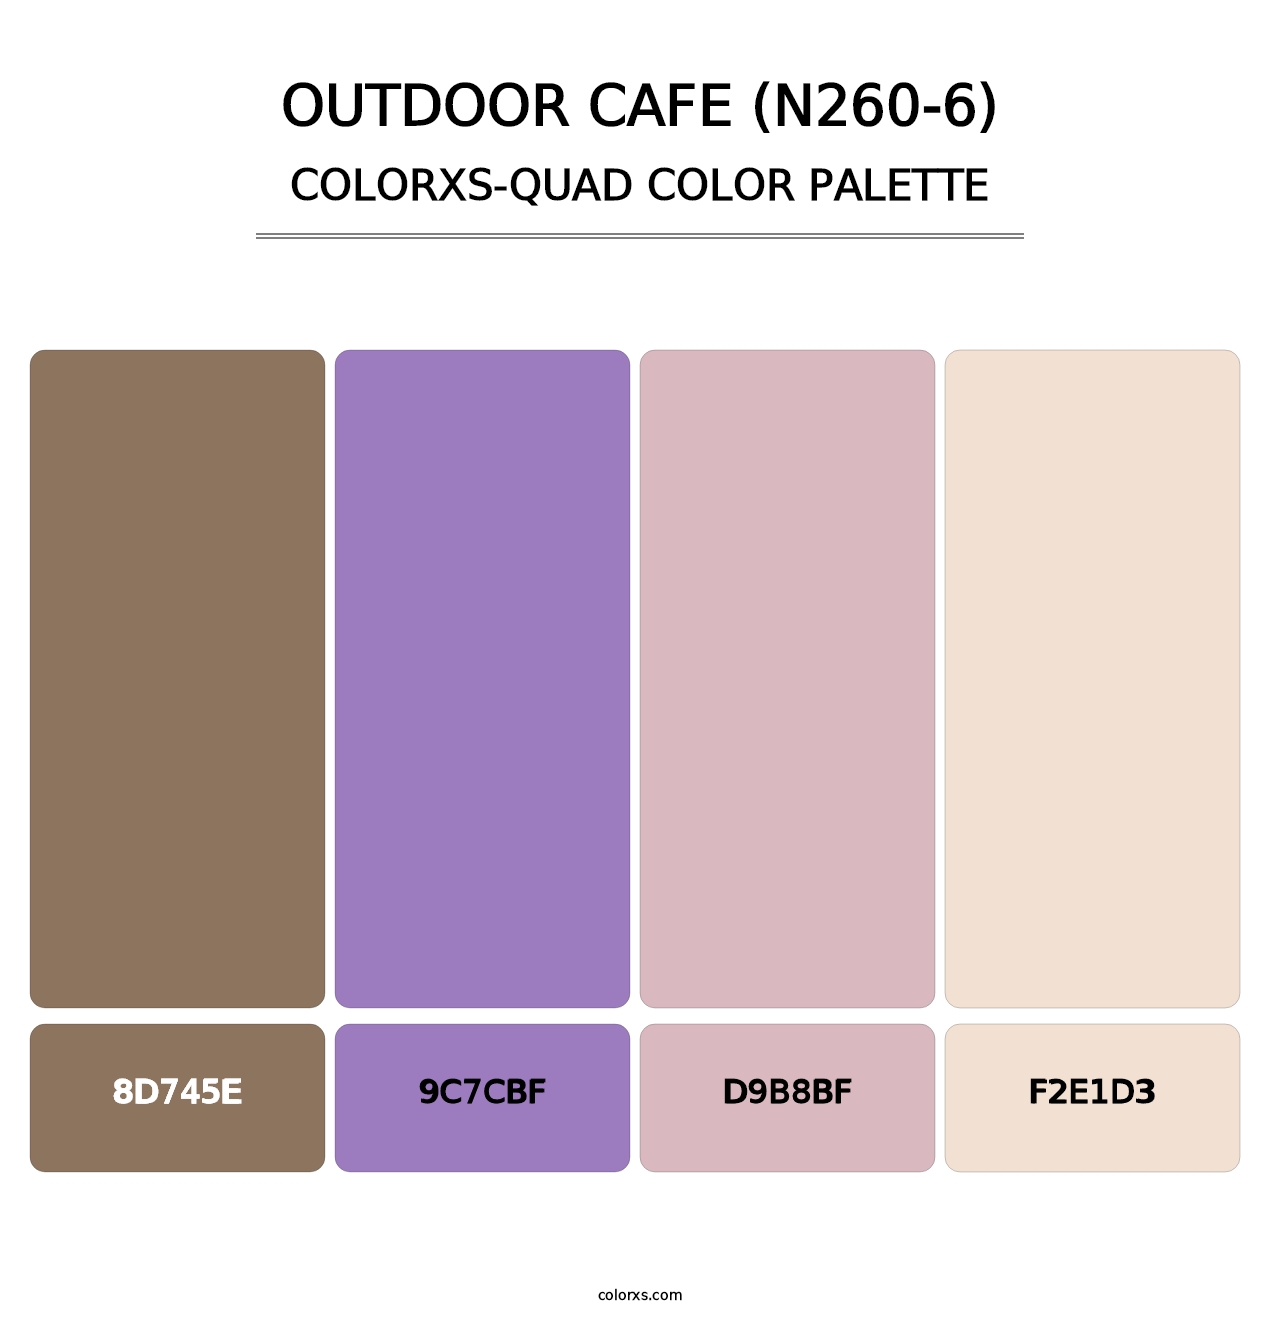 Outdoor Cafe (N260-6) - Colorxs Quad Palette